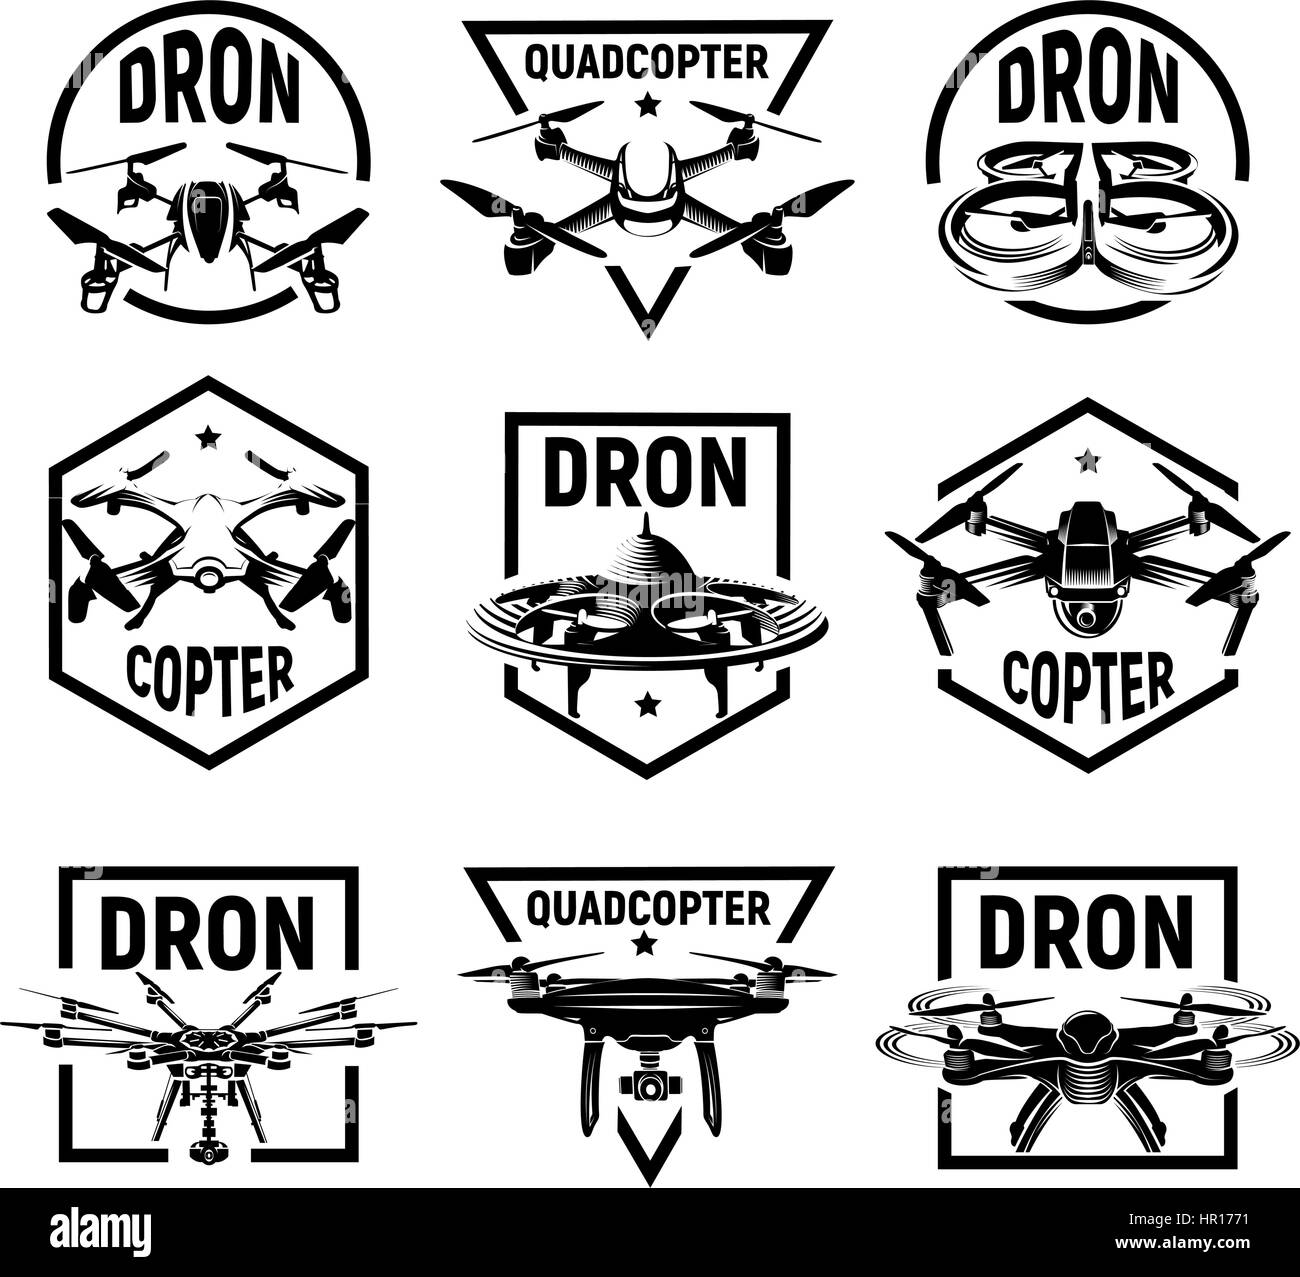 Isolierte monochrome Quadcopter Symbole in Rahmen, Rc Drohne Logos Sammlung, Fpv-Gerät-Logo-Set Vektor-Illustration. Stock Vektor